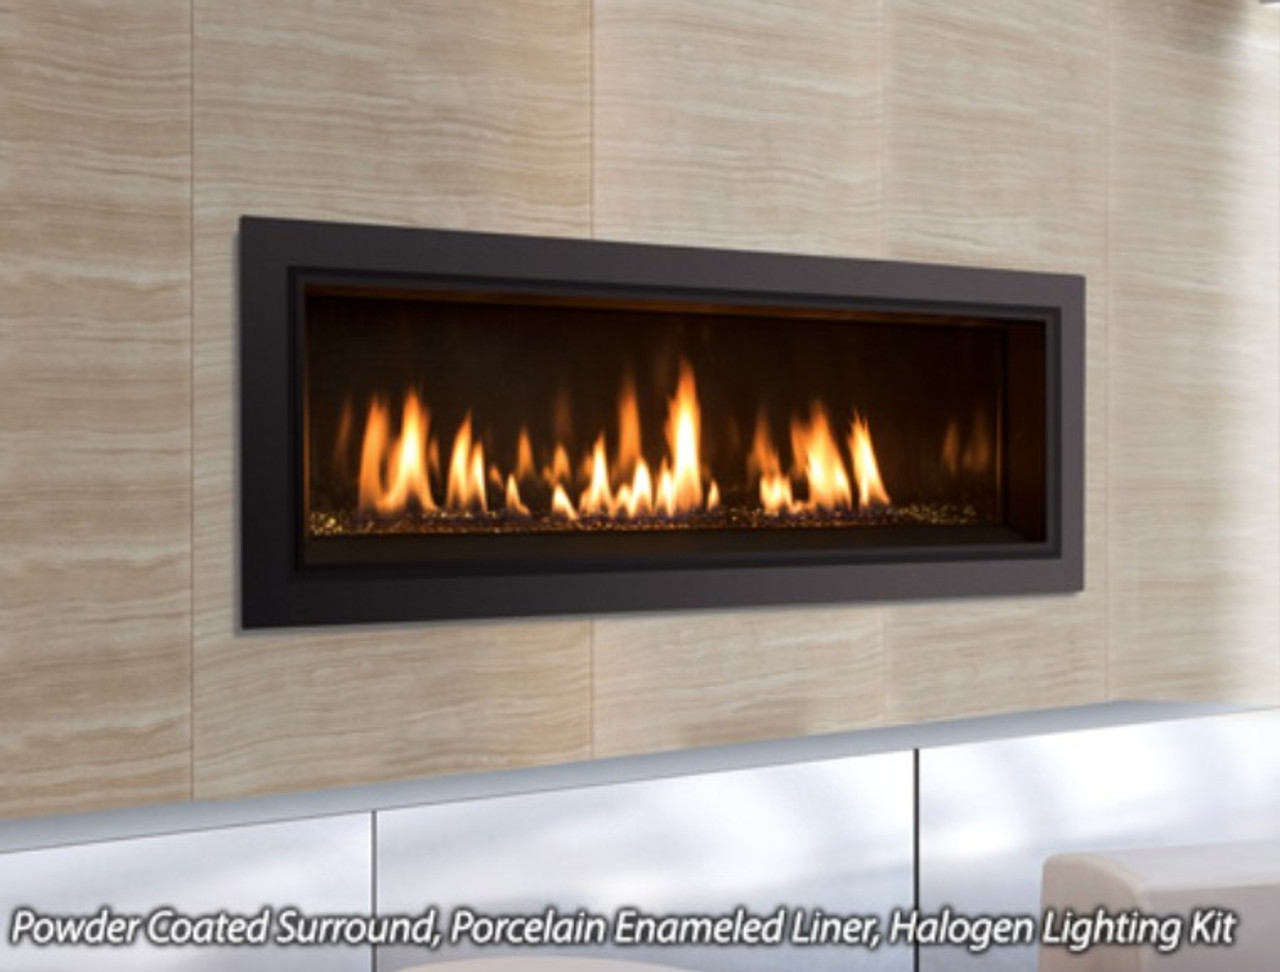 Enviro C44 Linear Gas Fireplace